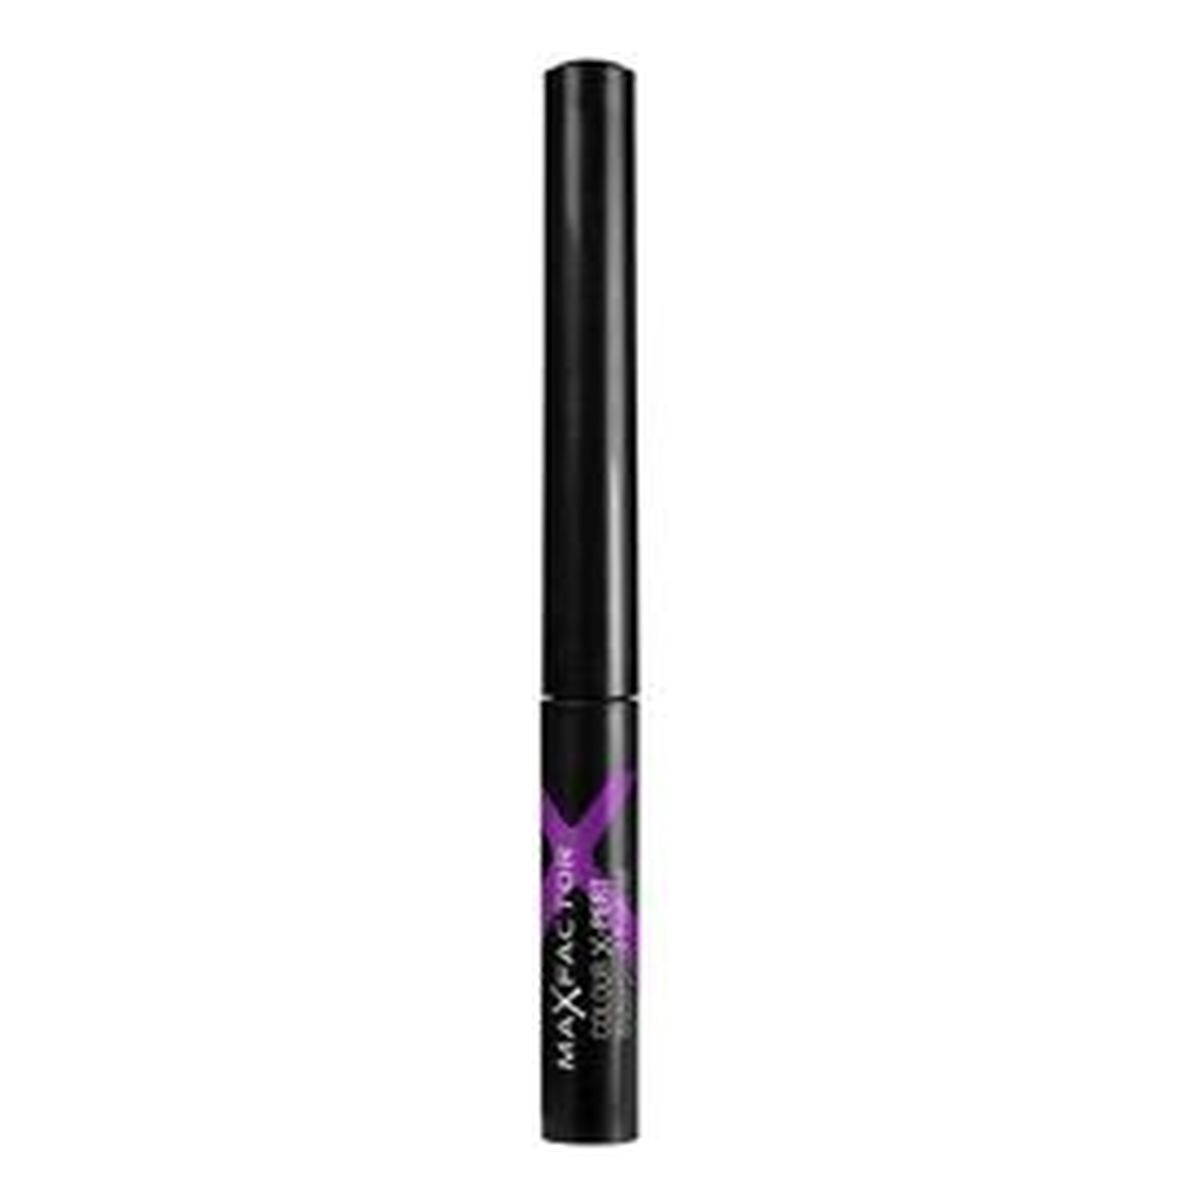 Max Factor Colour Xpert Waterproof Liner wodoodporny eyeliner 9g